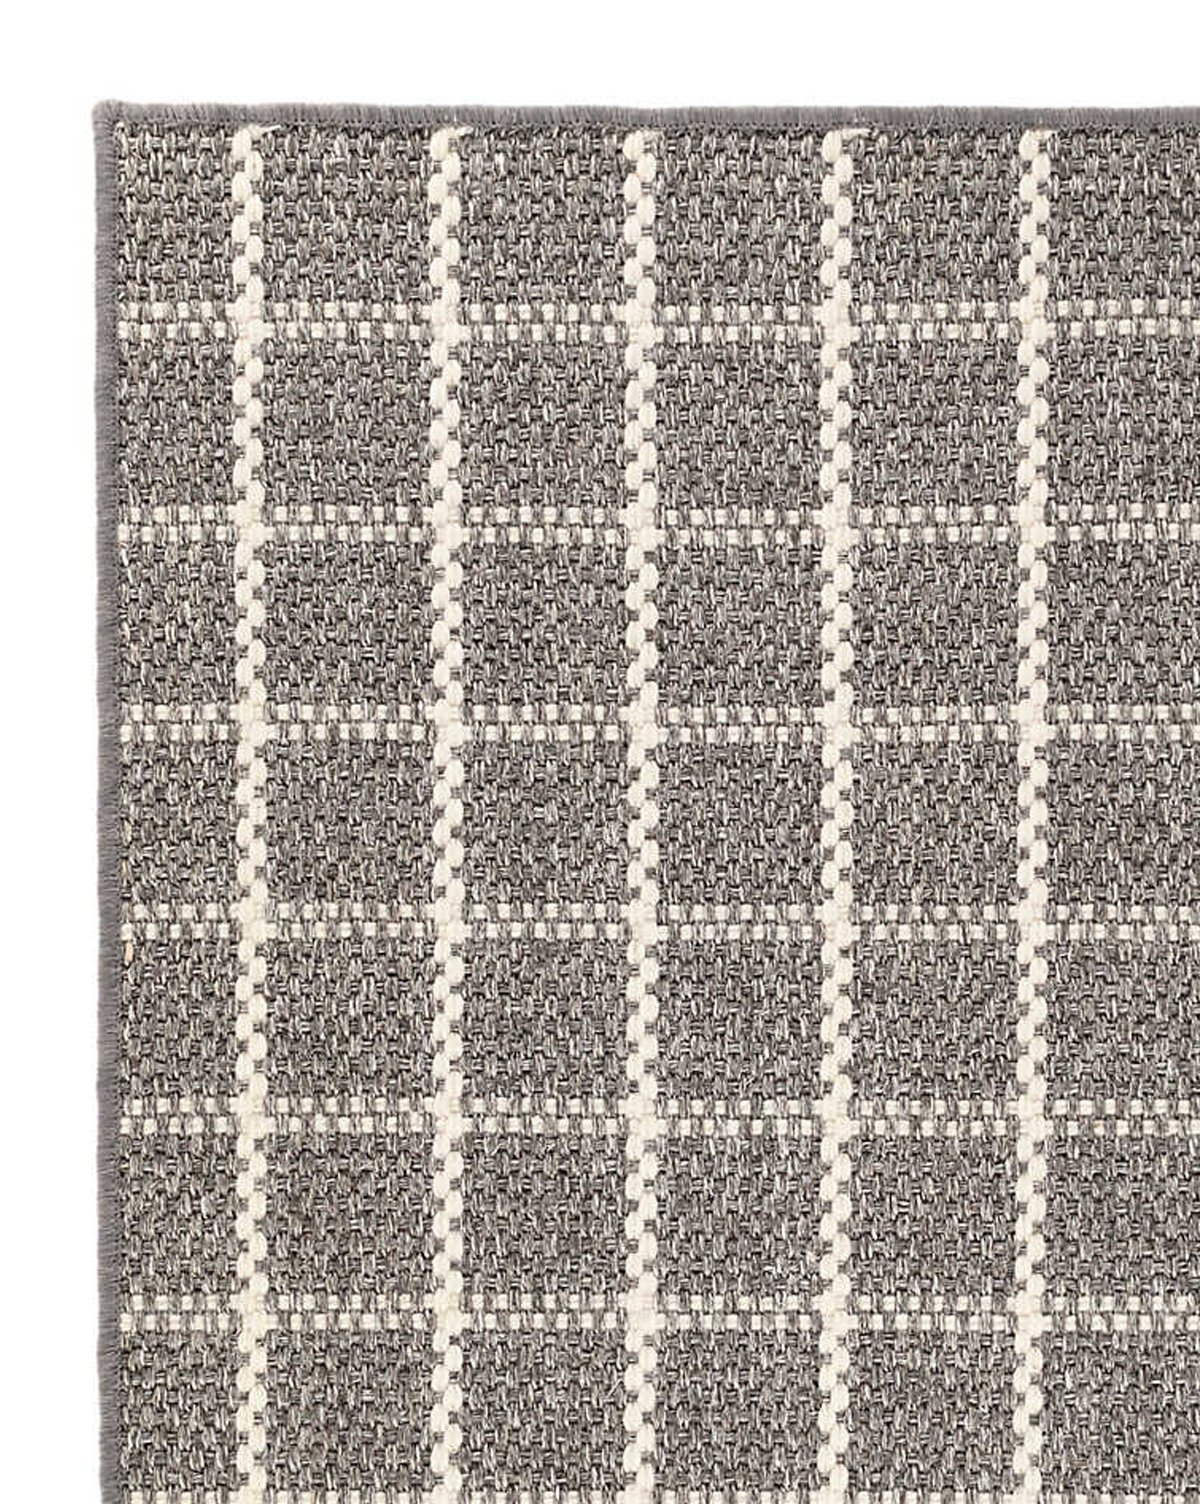 FRAMEWORK GRAY WOVEN SISAL RUG, 9' x 12' - Image 1